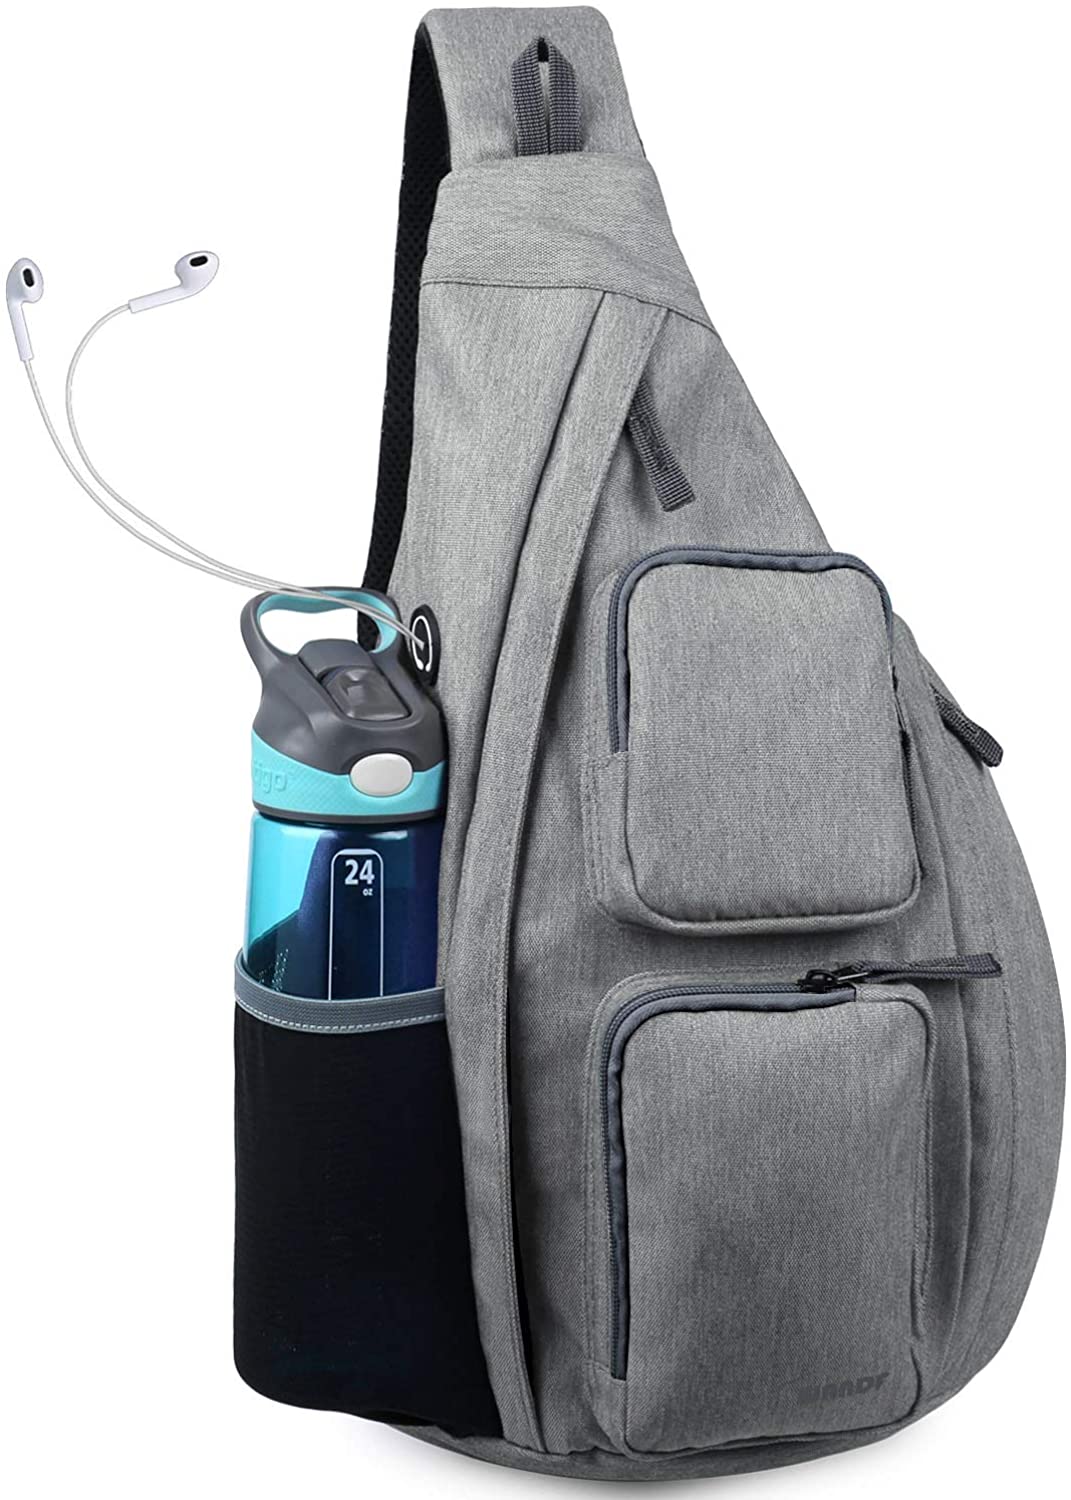 Big Size Sling Bag WaterResistant One Strap Backpack WANDF 8026 Travel